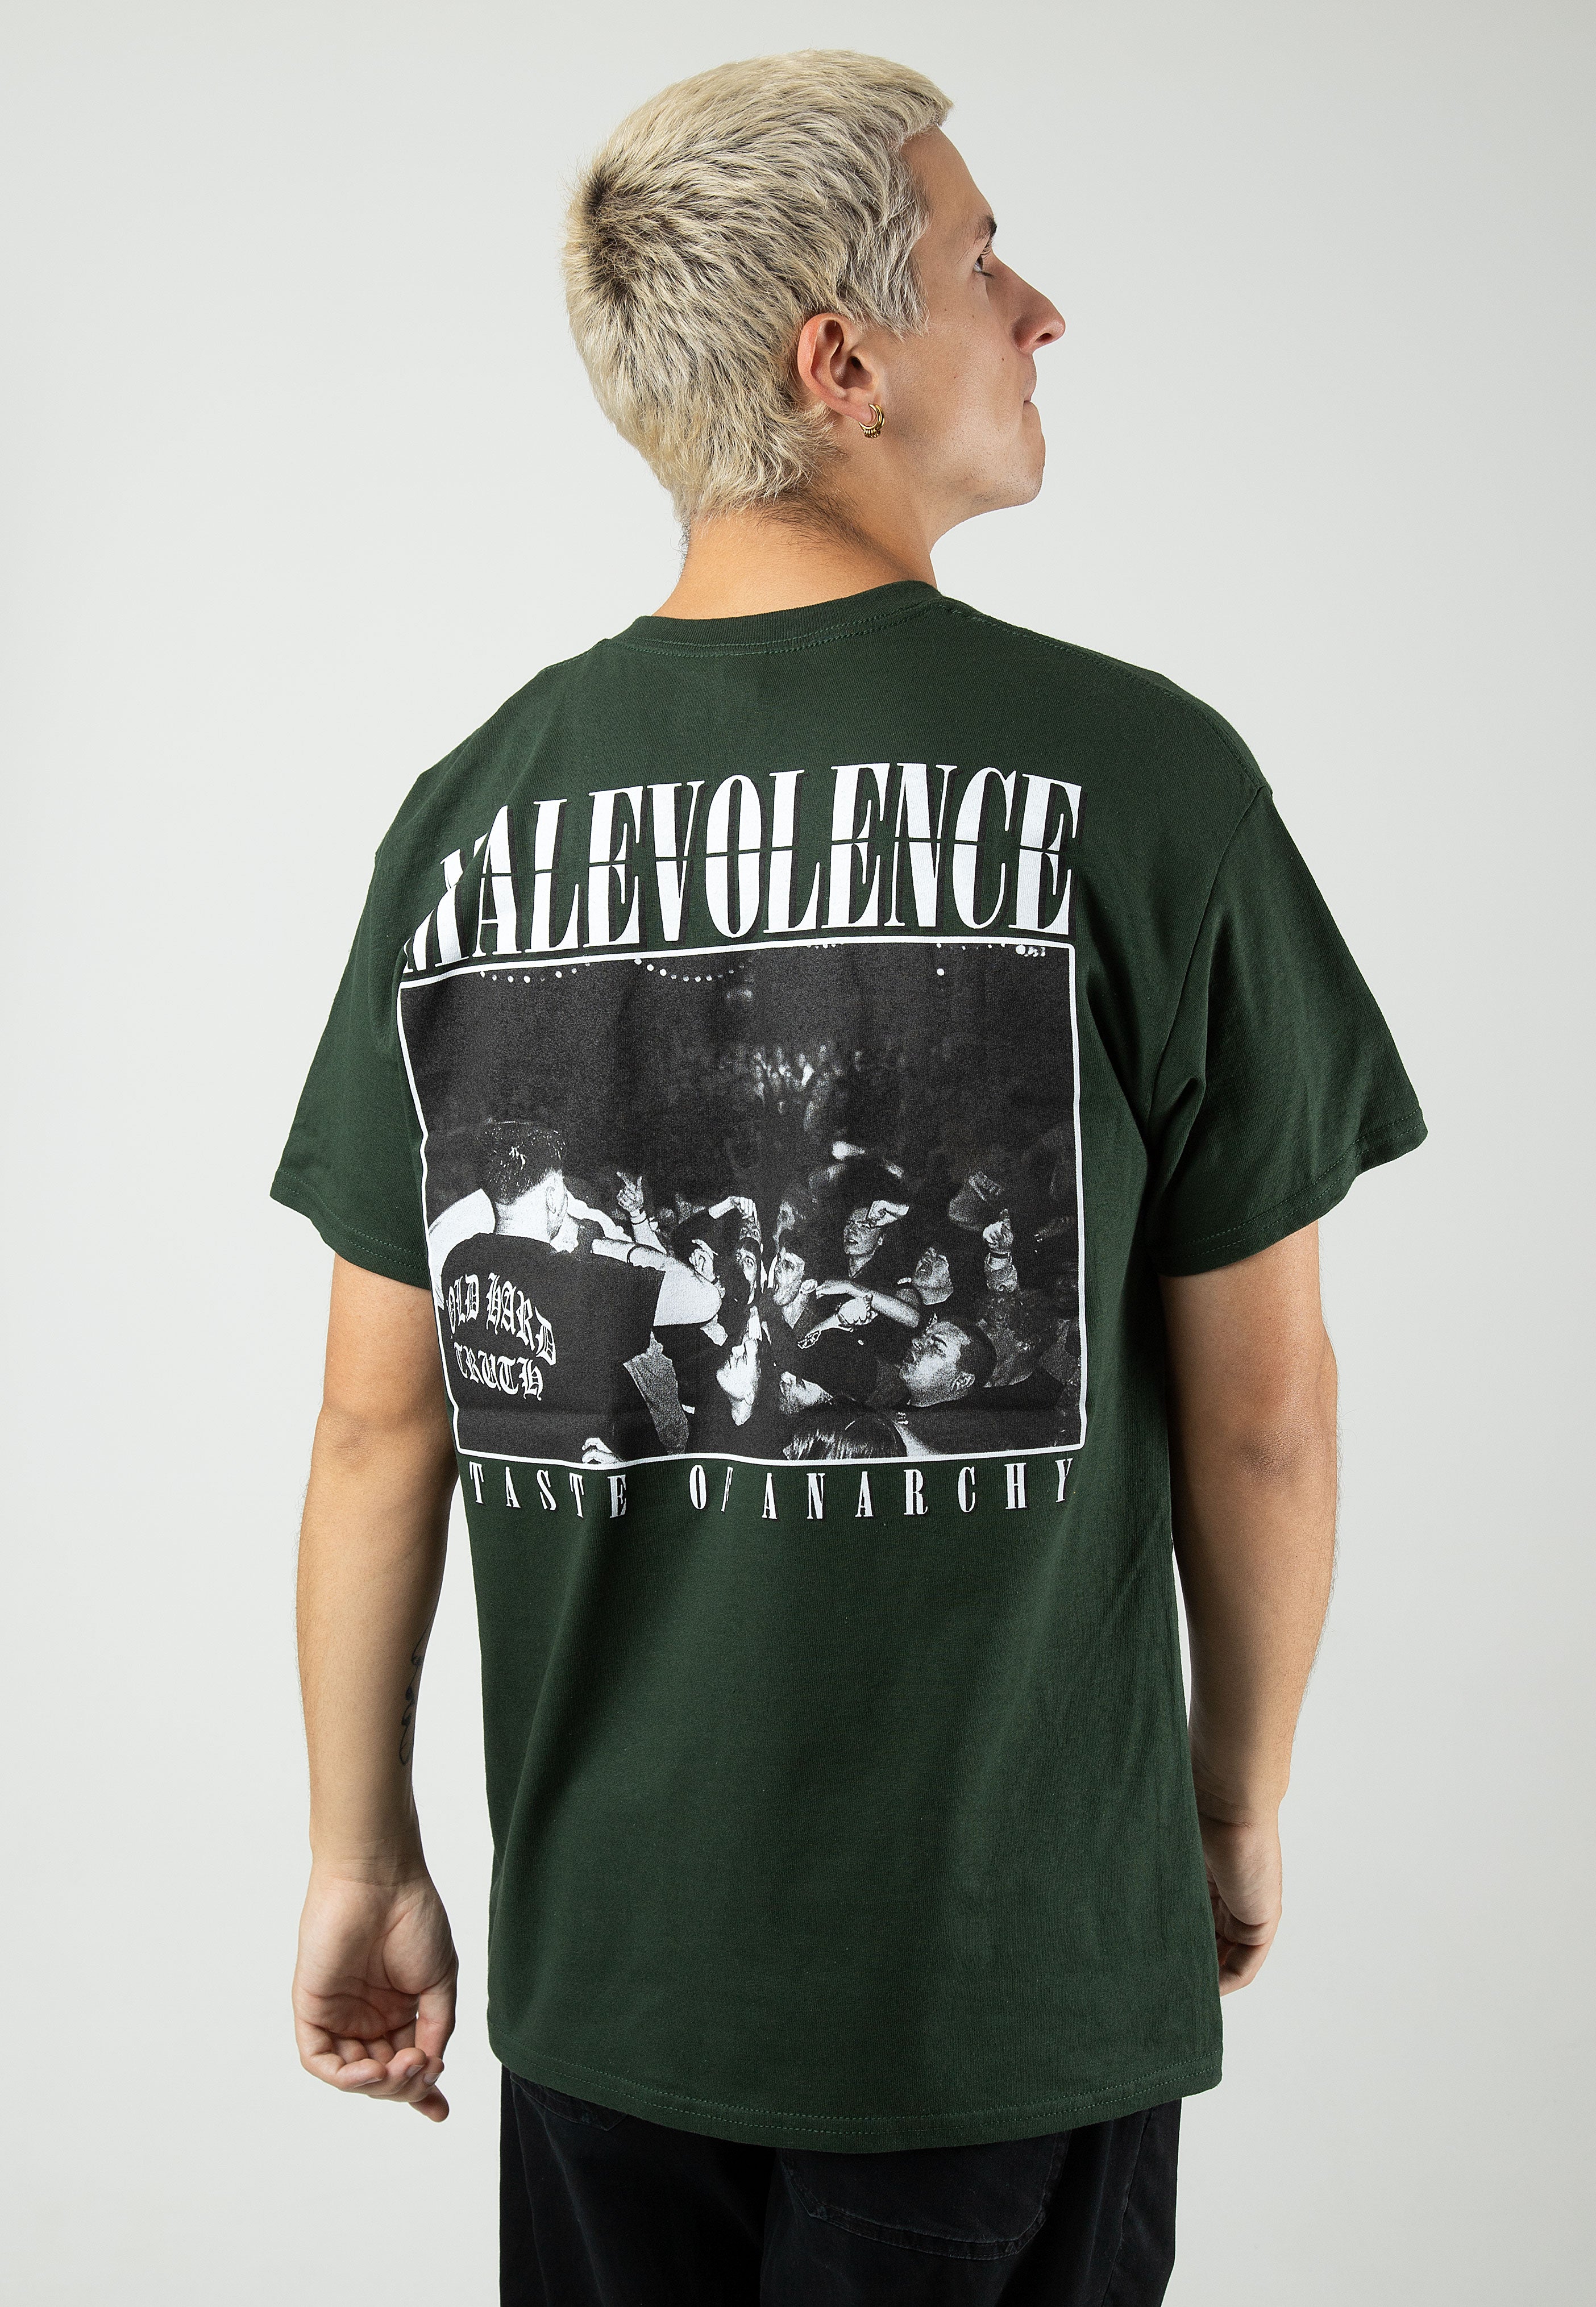 Malevolence - Taste Of Anarchy Forest Green - T-Shirt